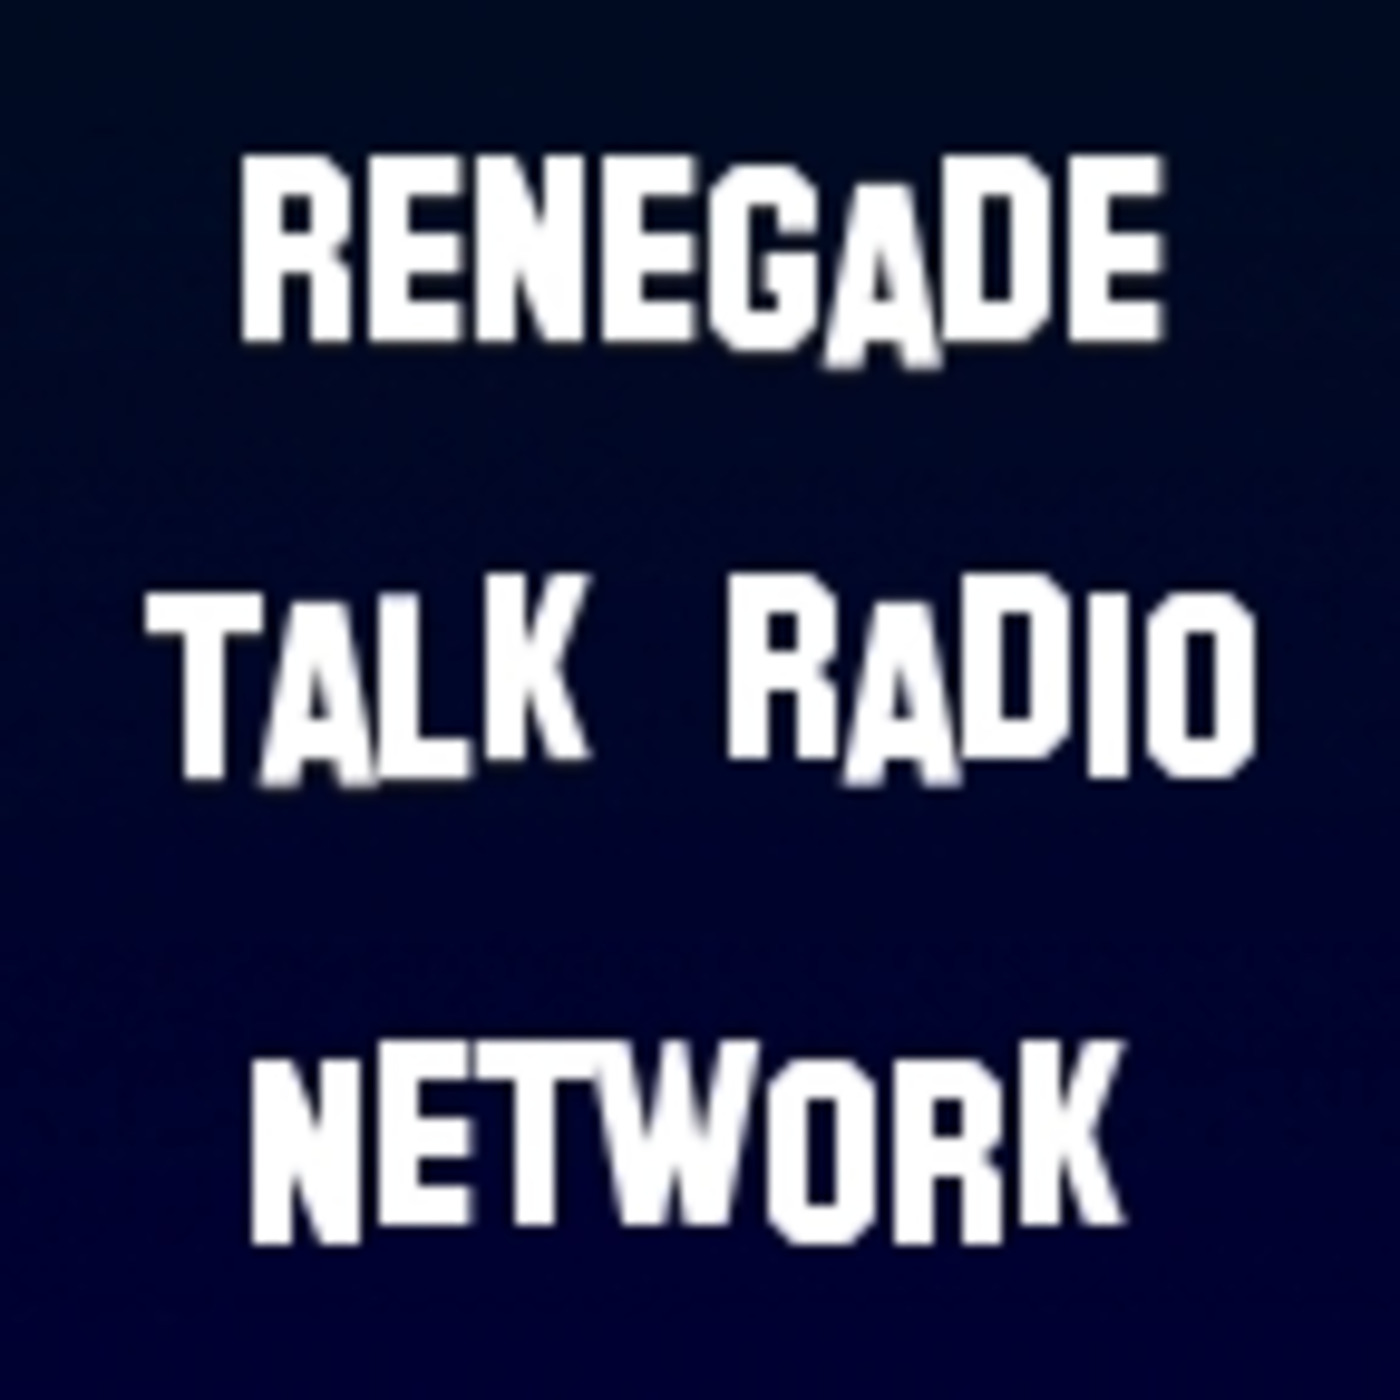 Renegade Talk Radio